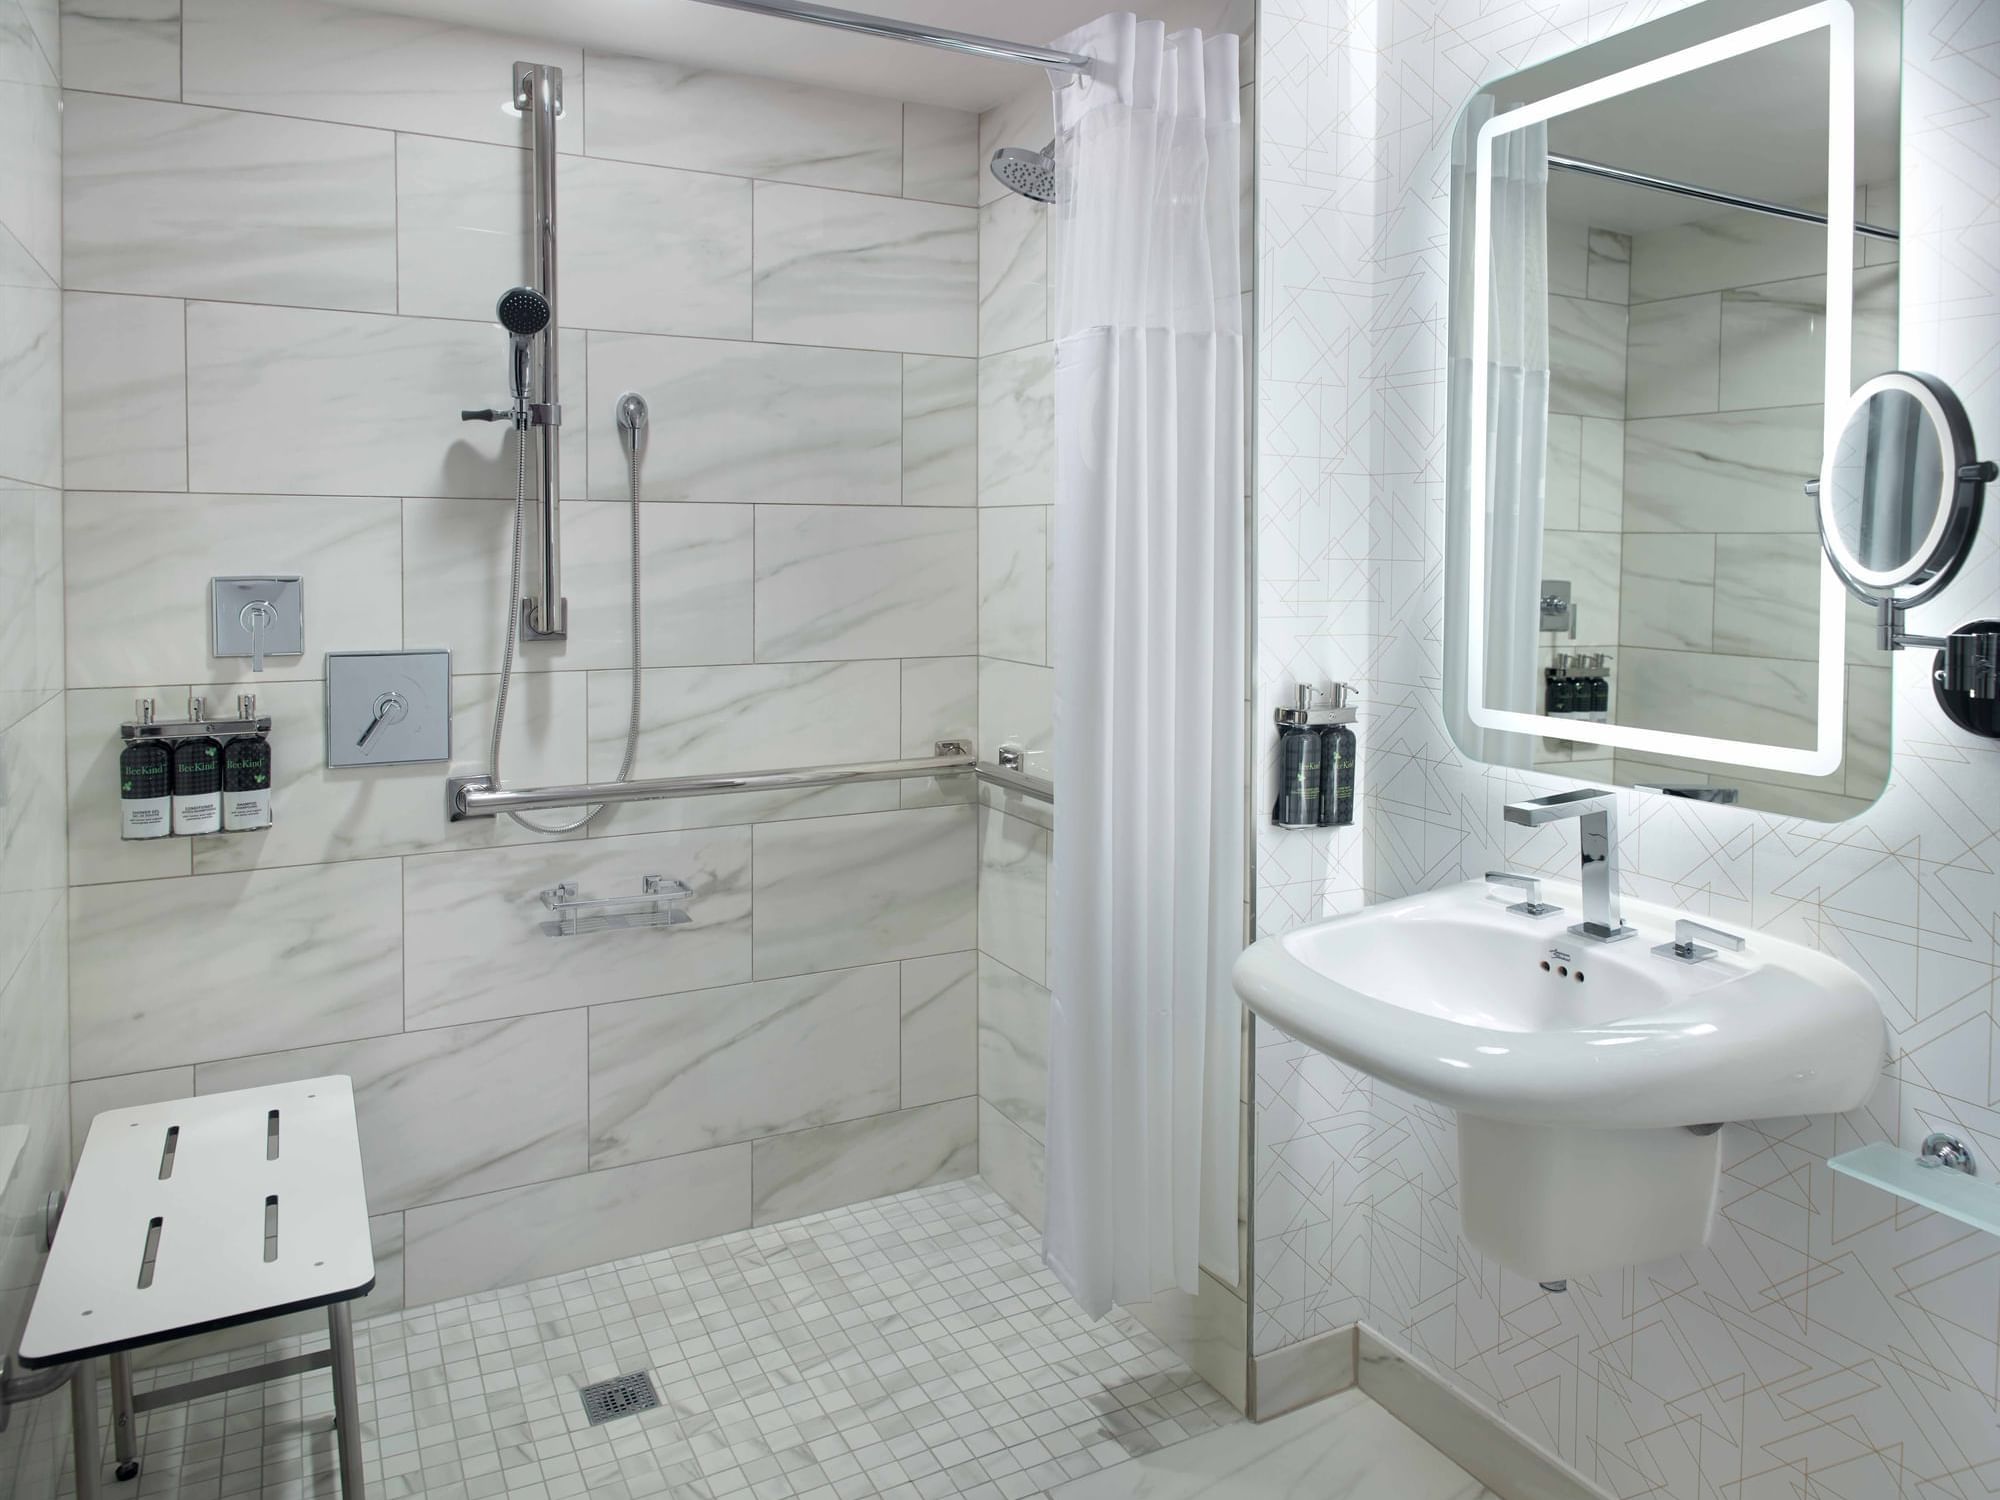 Georgia Tech Hotel Accessible Bathroom - Roll In Shower